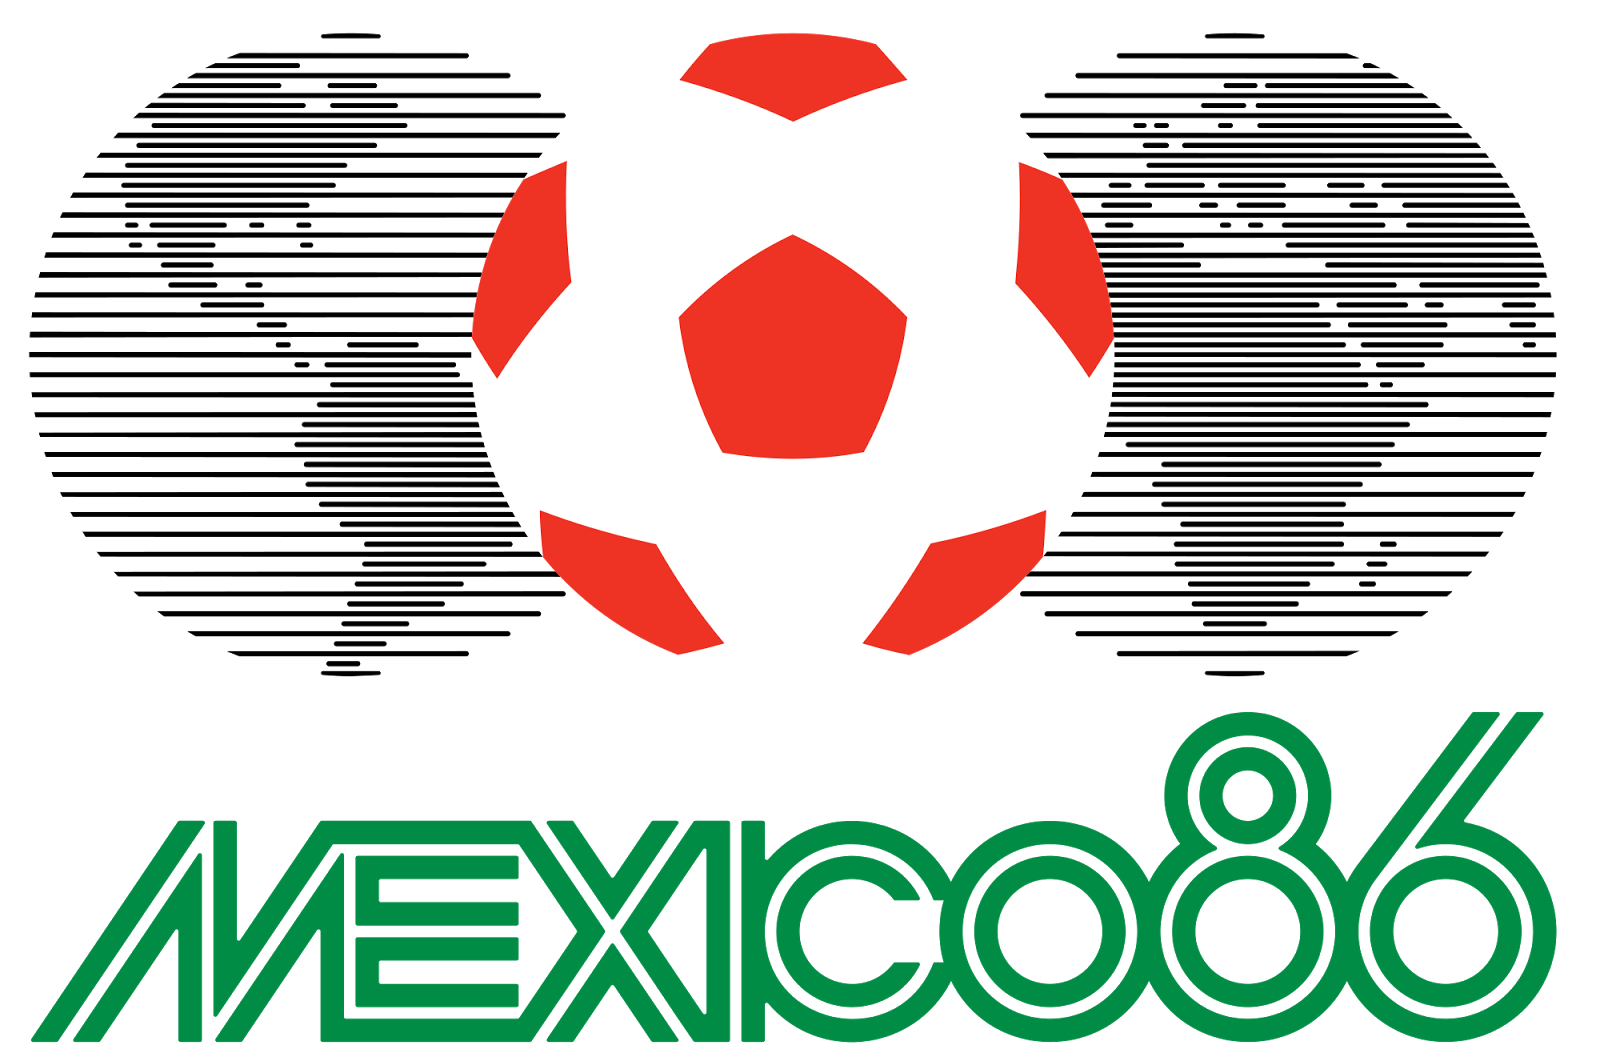 чемпионат мира по футболу, логотип, бренд, фирменный стиль, FIFA World Cup, logo, brand, Мексика 1986